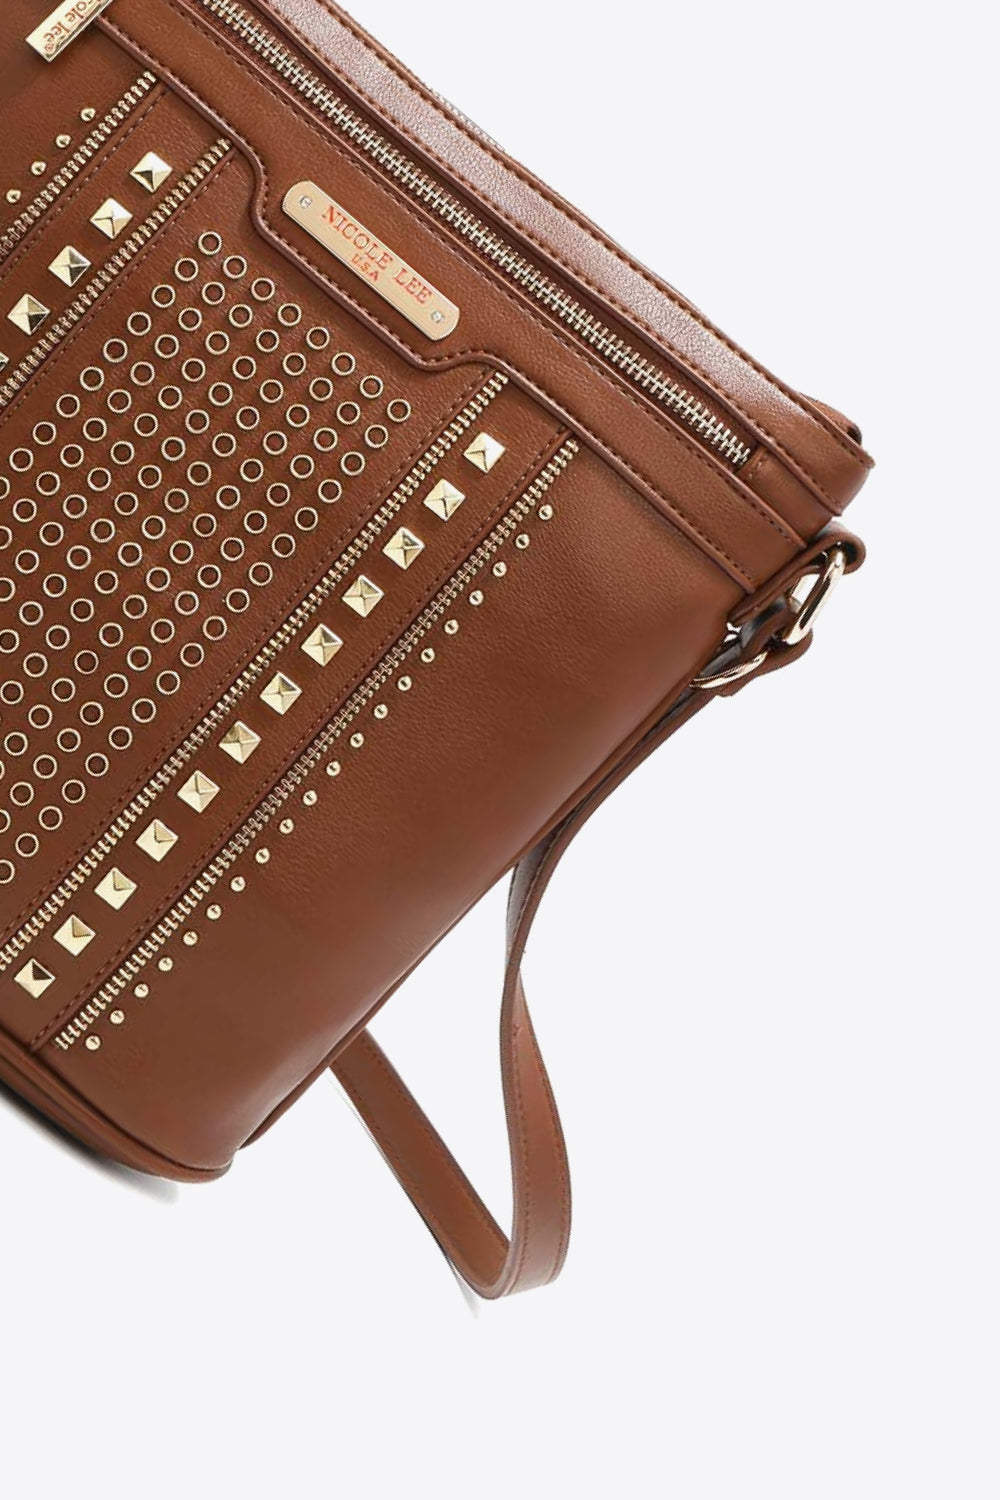 Elegant Love Handbag for Everyday Use